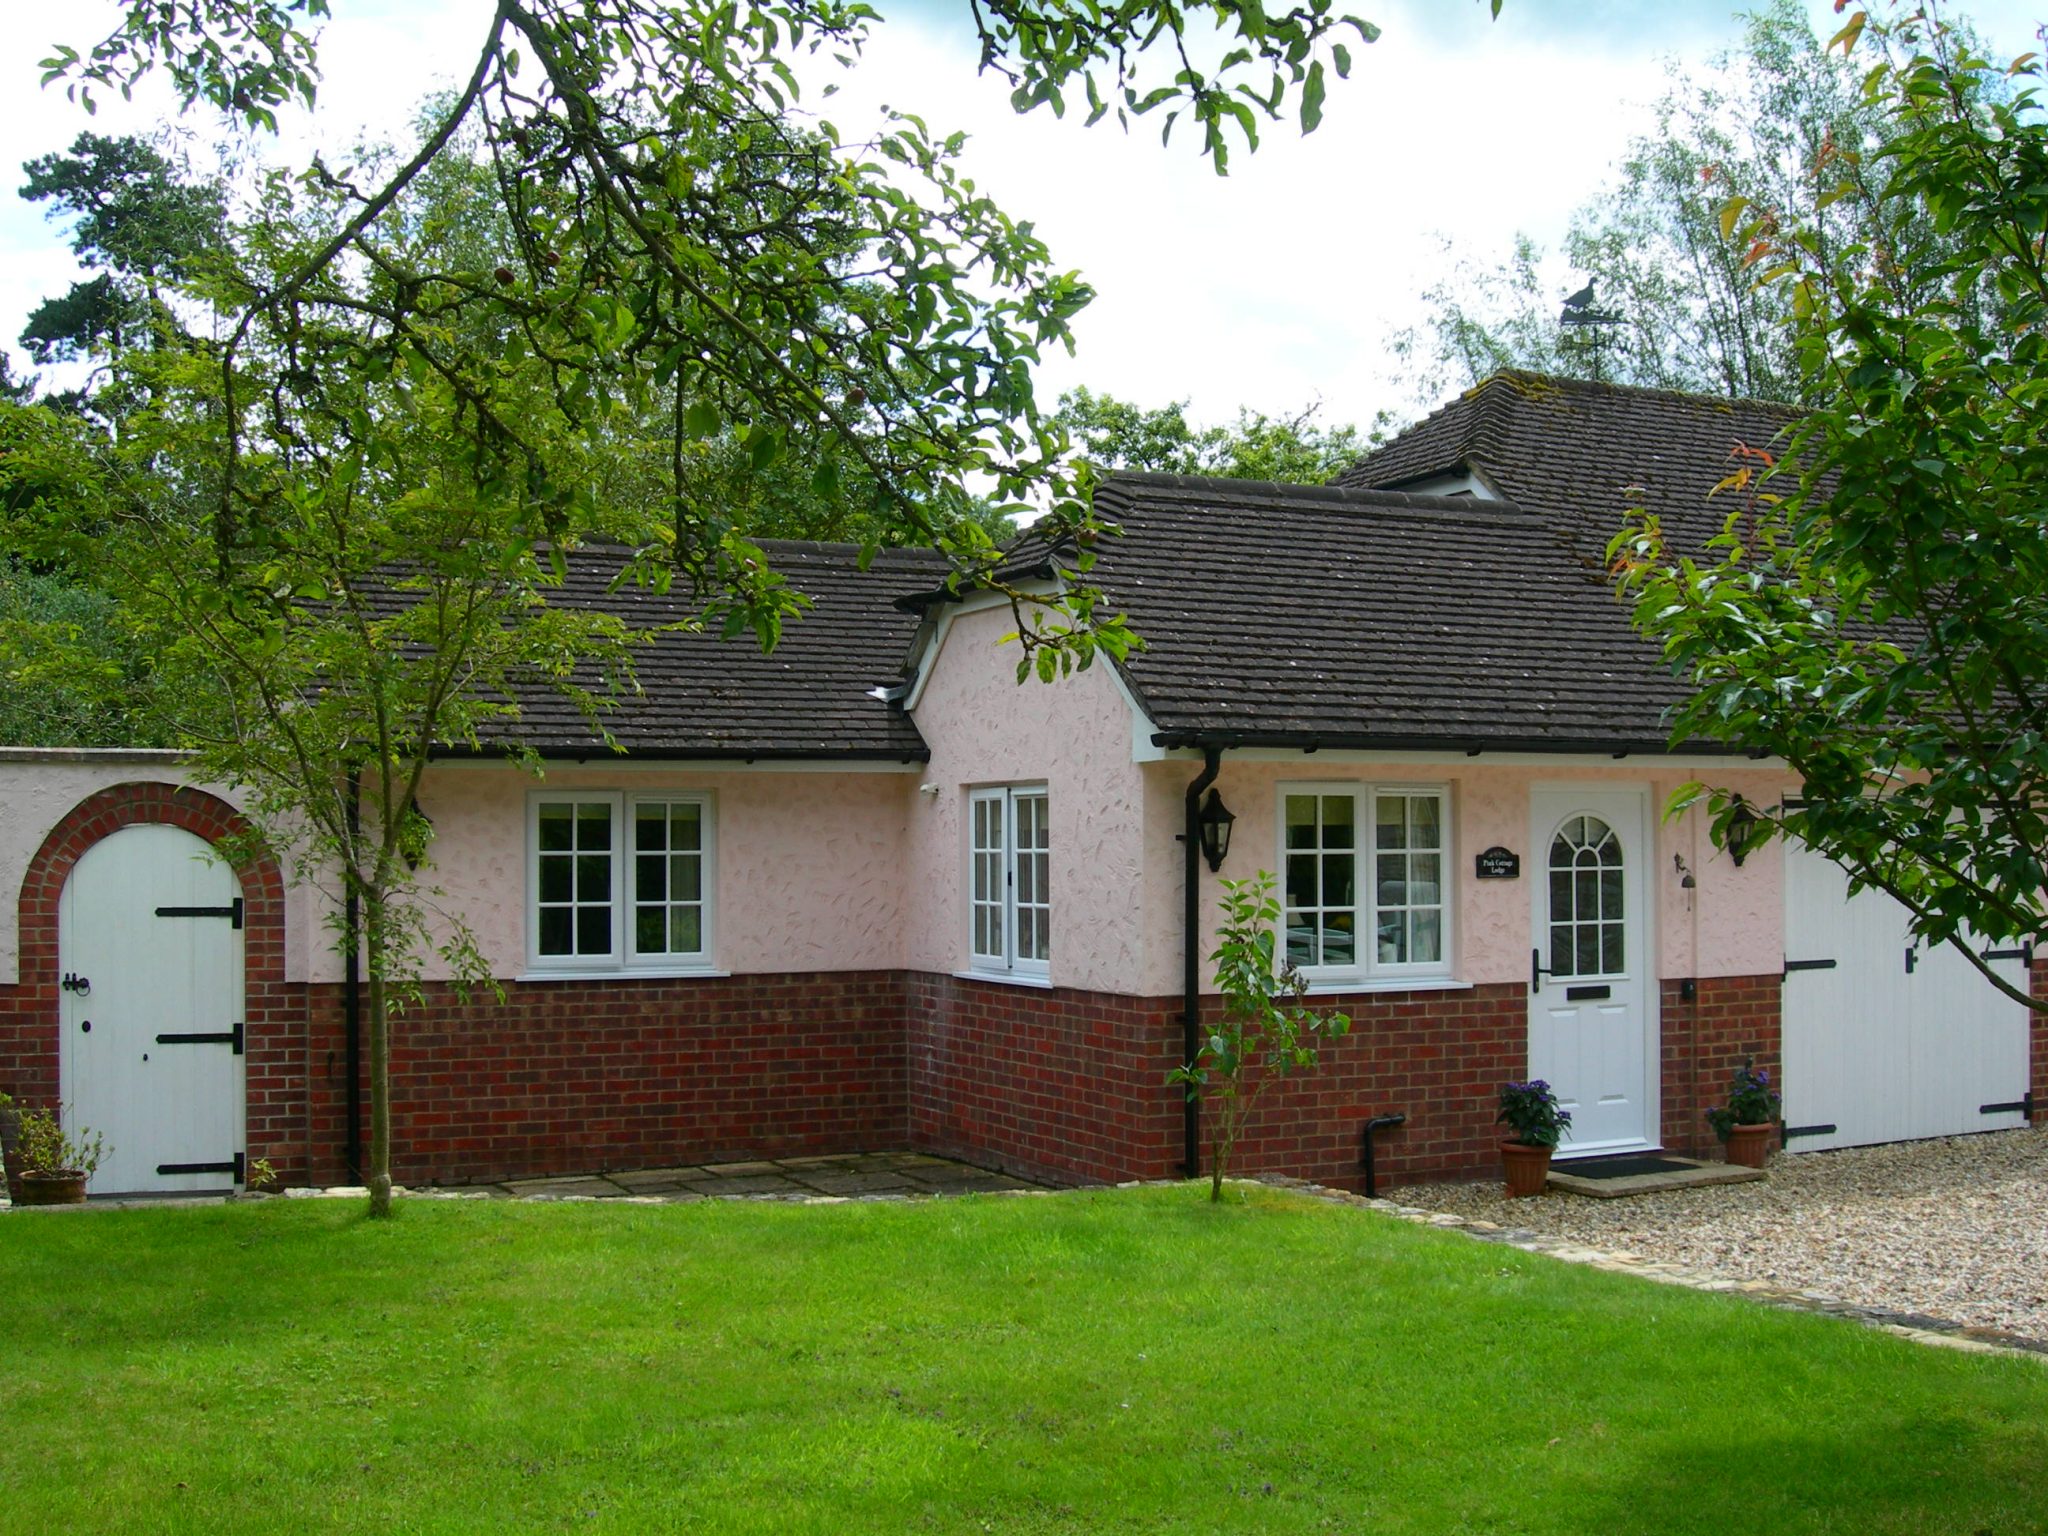 Property to rent, property to let, War minster, Pink Cottage Lodge Summer, John Loftus Property Centre